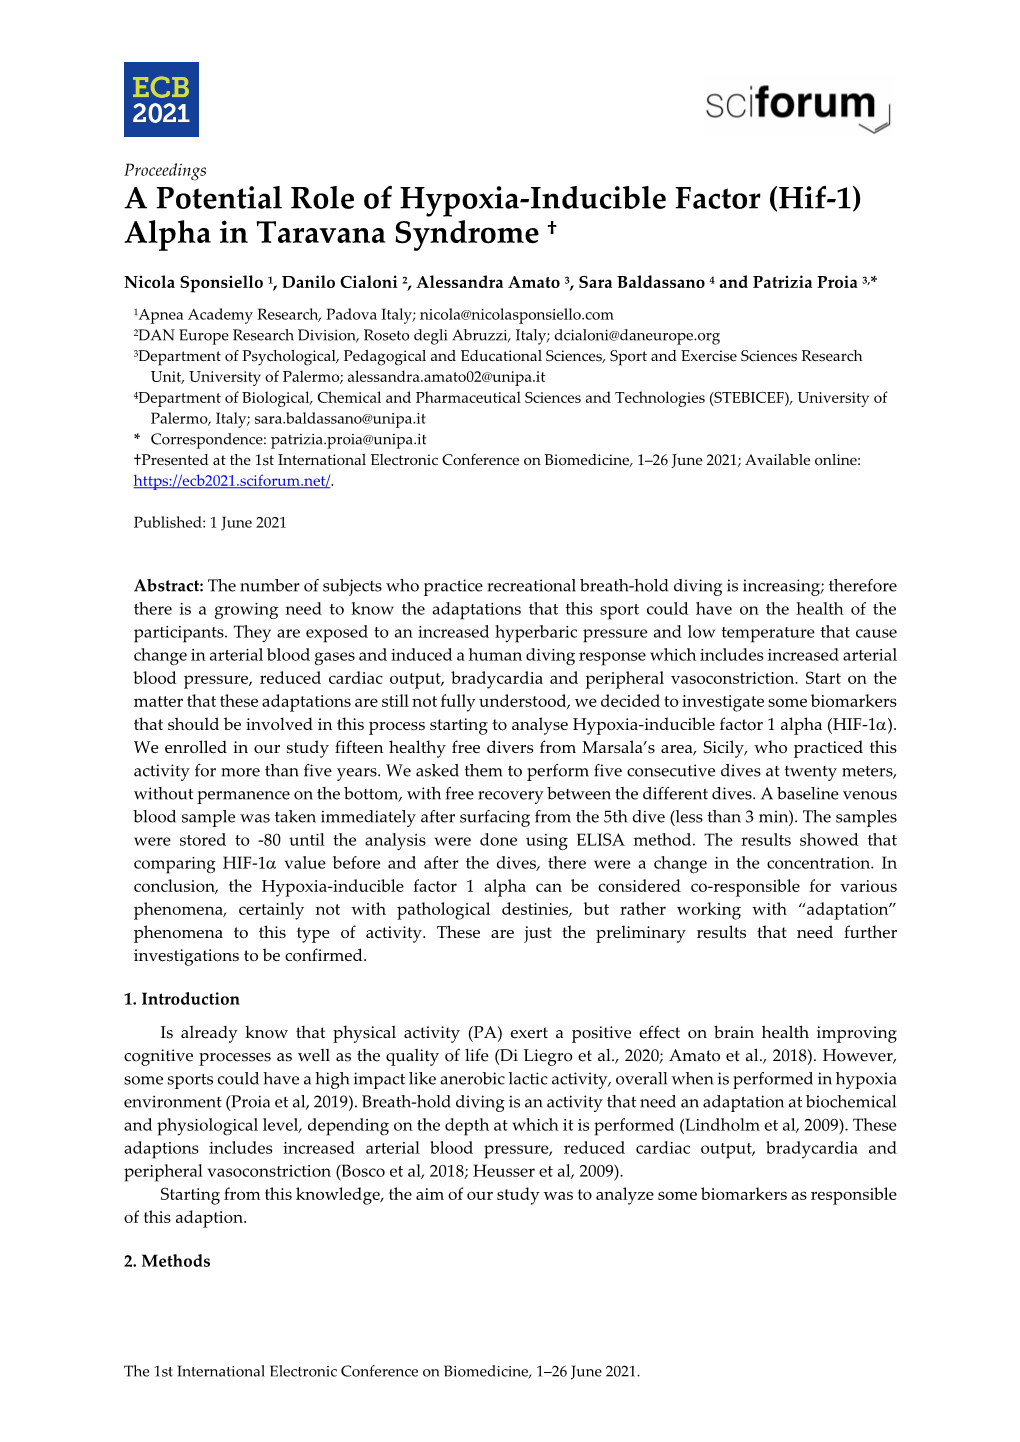 A Potential Role of Hypoxia-Inducible Factor (Hif-1) Alpha in Taravana Syndrome †